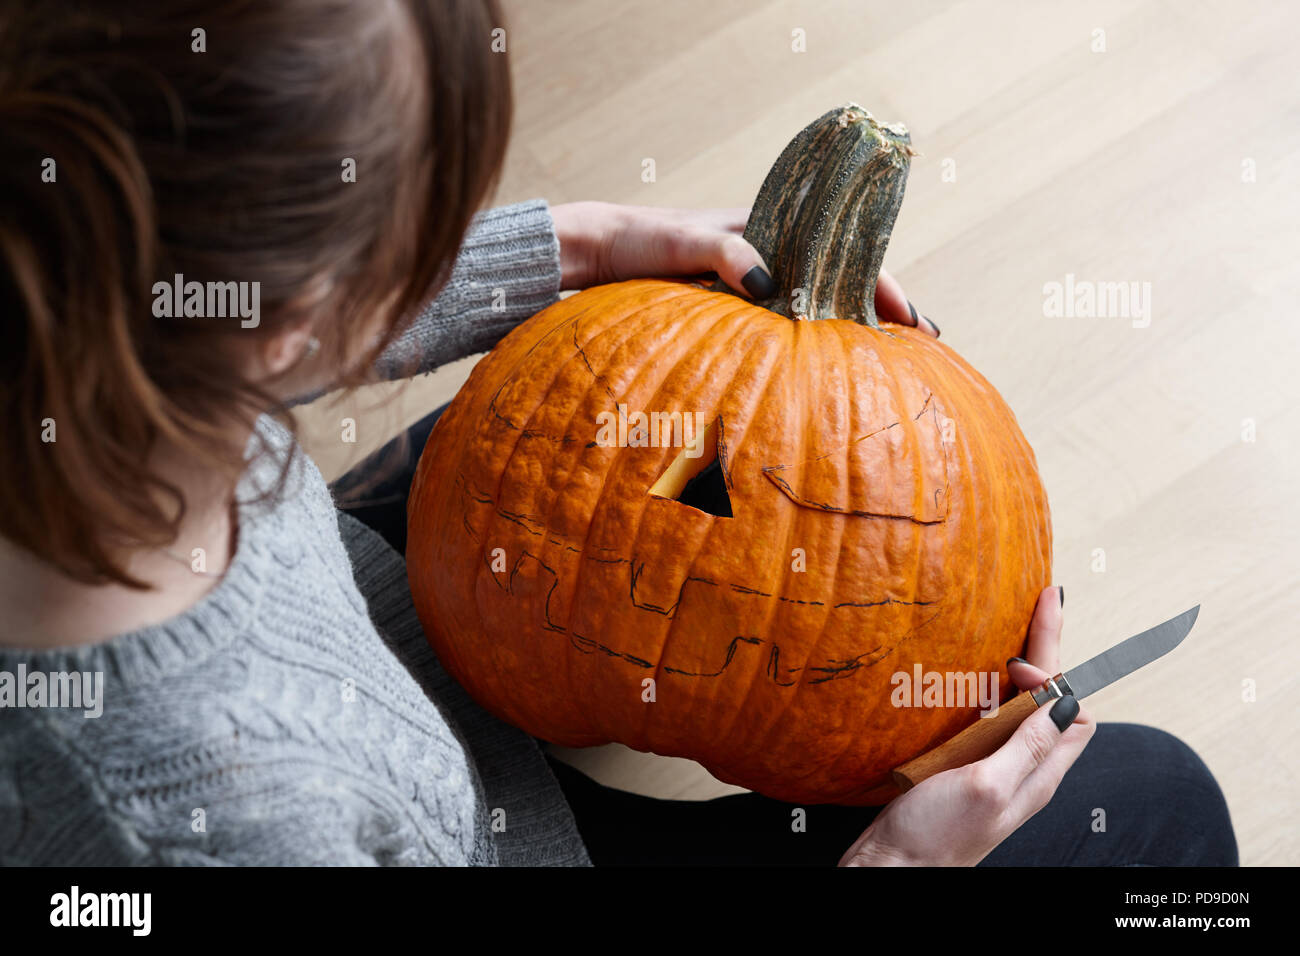 Carving halloween pumpkin into jack-o-lantern, close up view Stock Photo